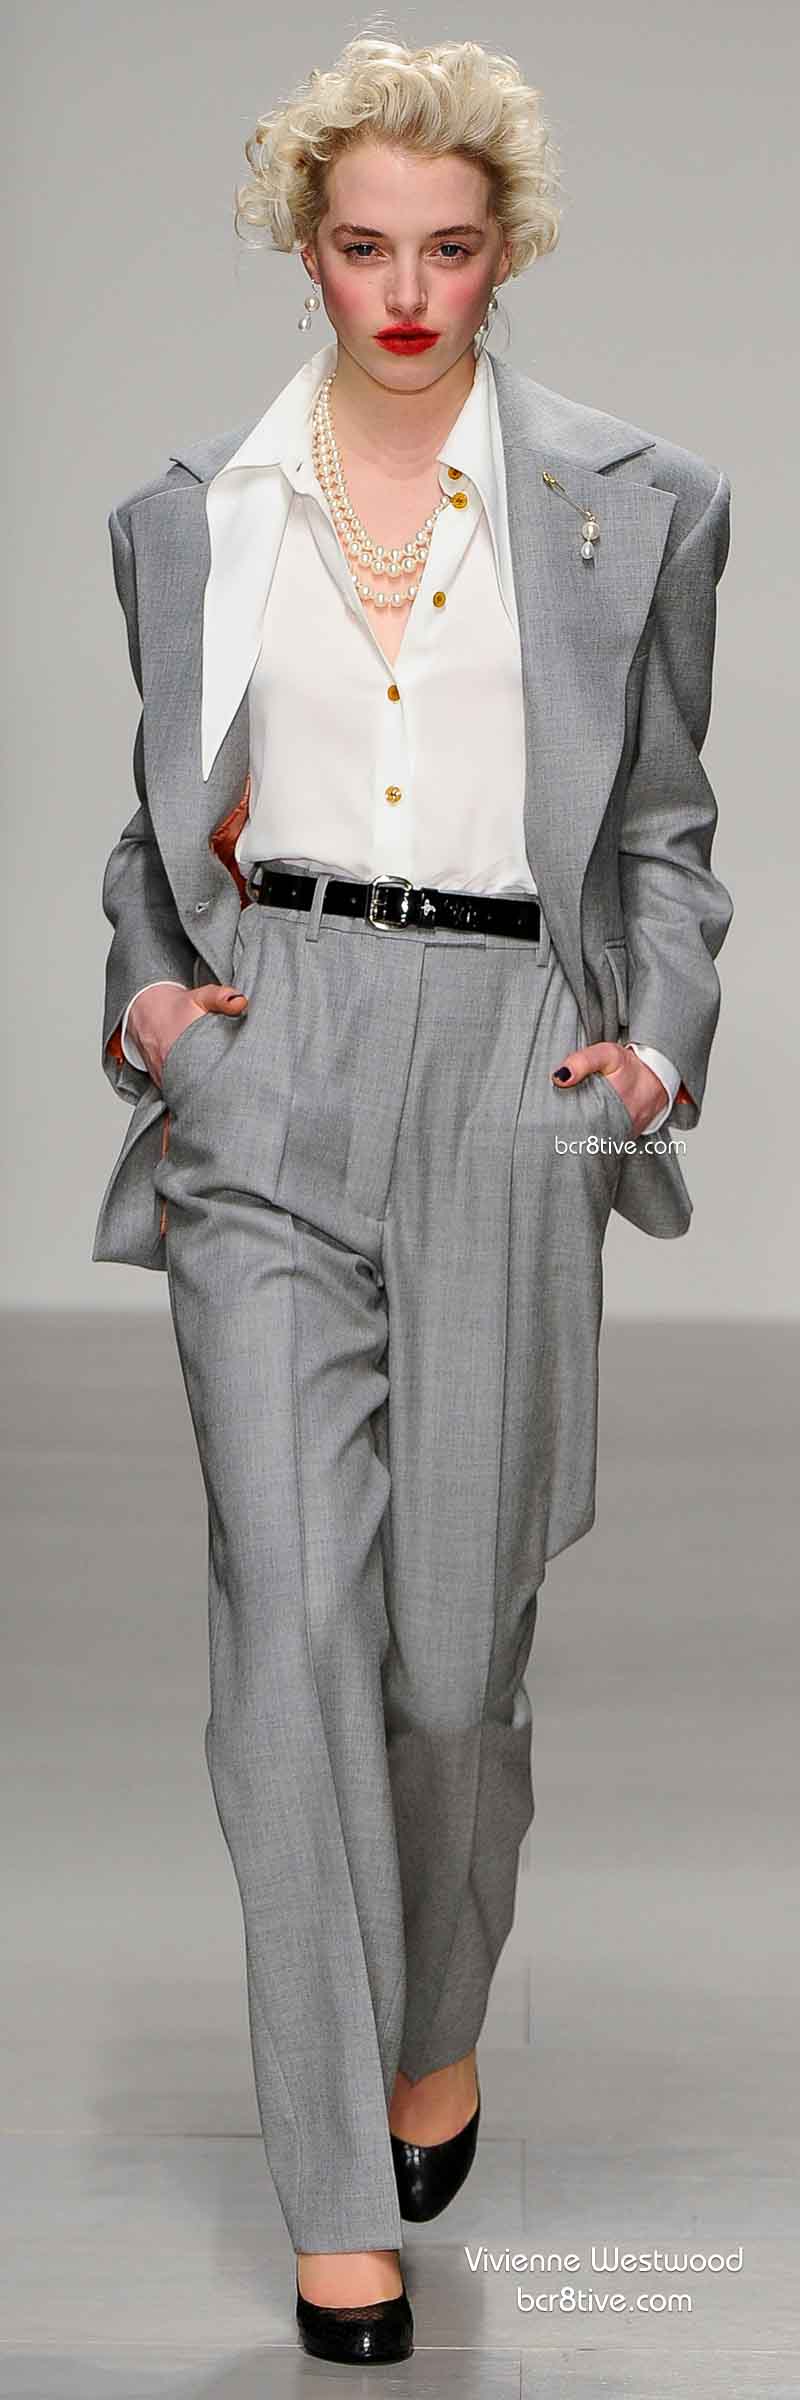 Fall 2014 Menswear Inspired Fashion - Vivienne Westwood